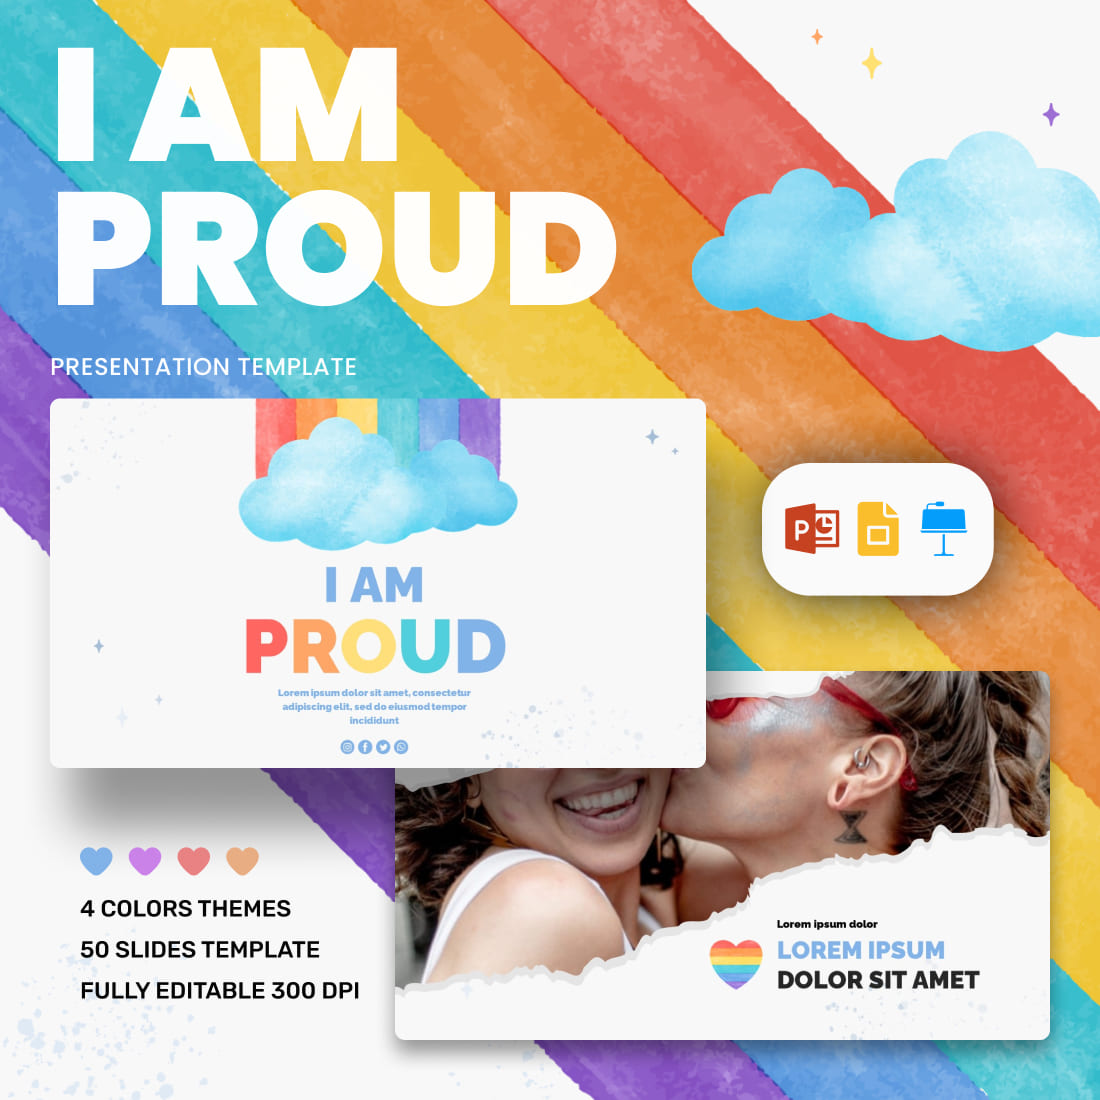 I'm Proud LGBTQ Presentation Template cover.